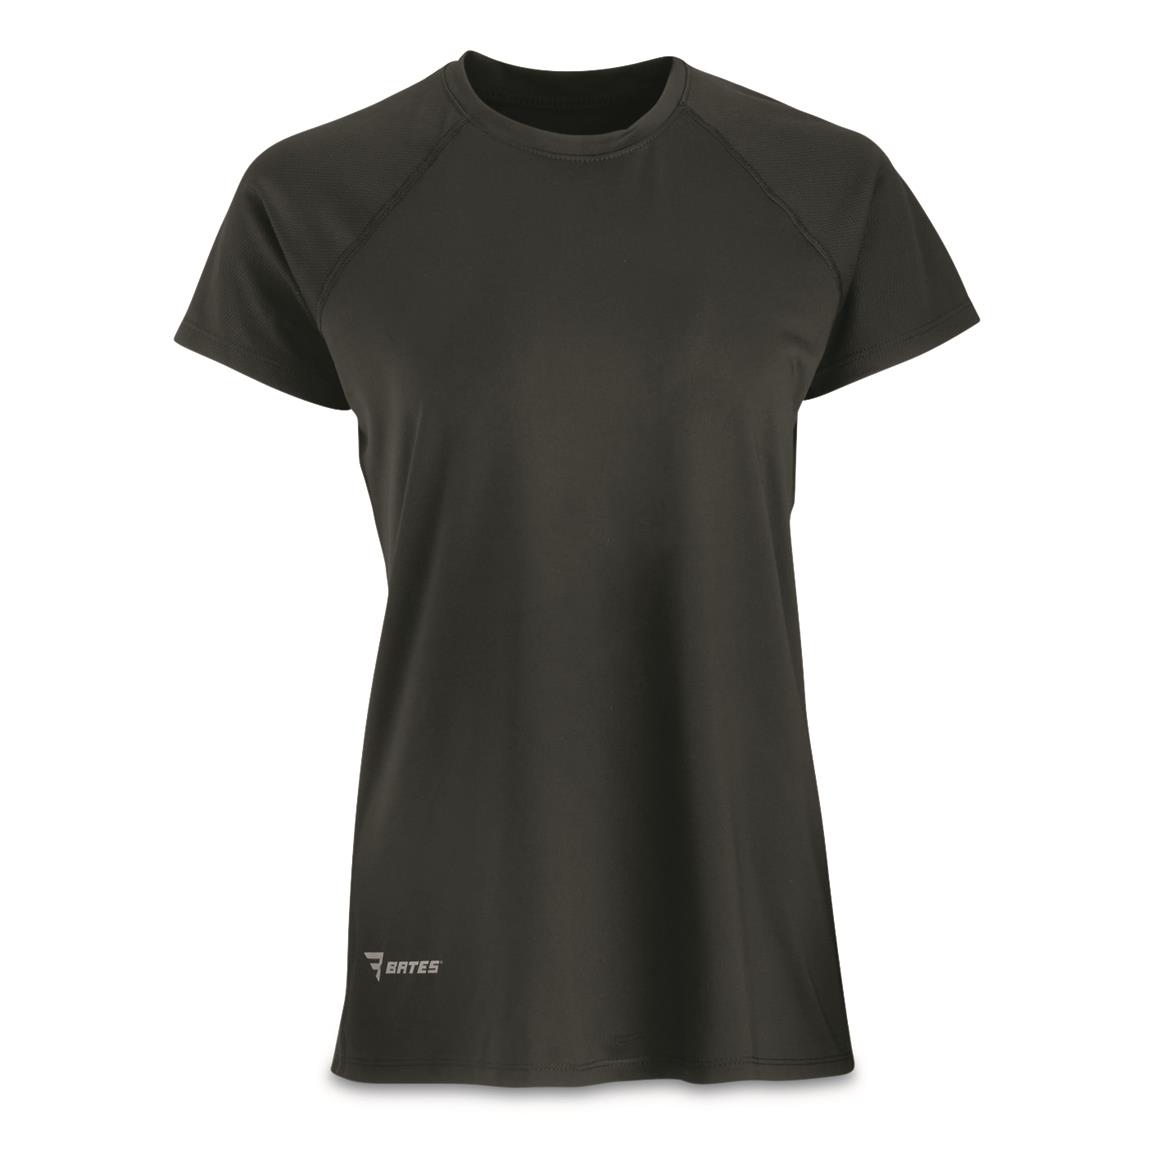 U.S. Military Surplus Bates Women's Short Sleeve Performance T-Shirts, 2 pack, New, Black